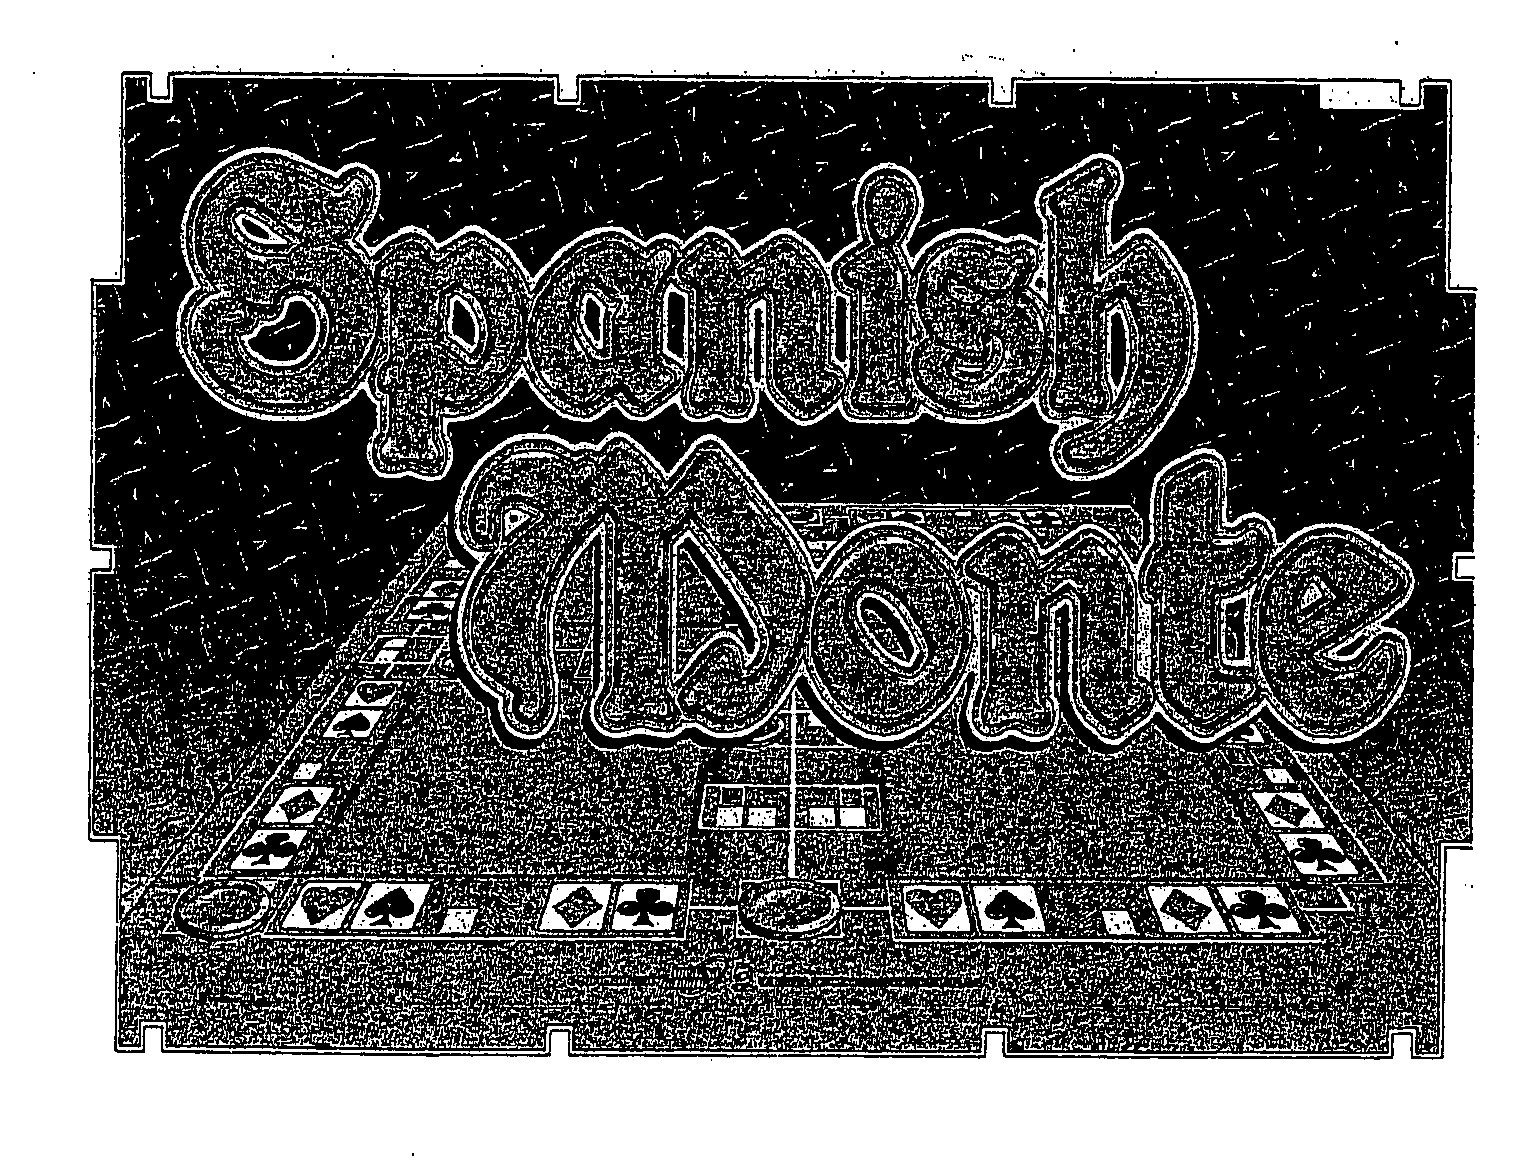  SPANISH MONTE